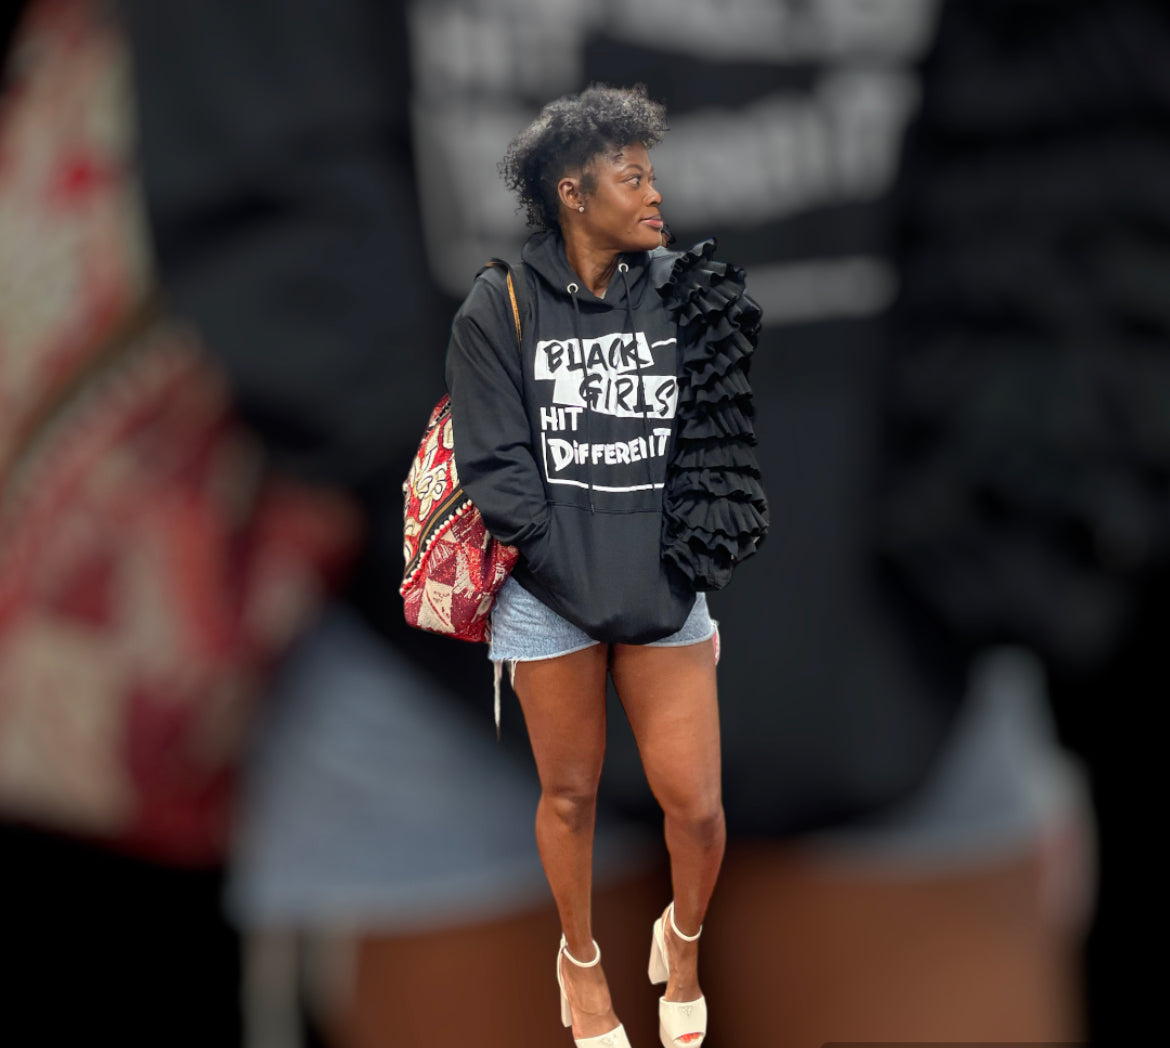 Black Girls Hit Different” Ruffle Sweatshirt – NDulge Collection